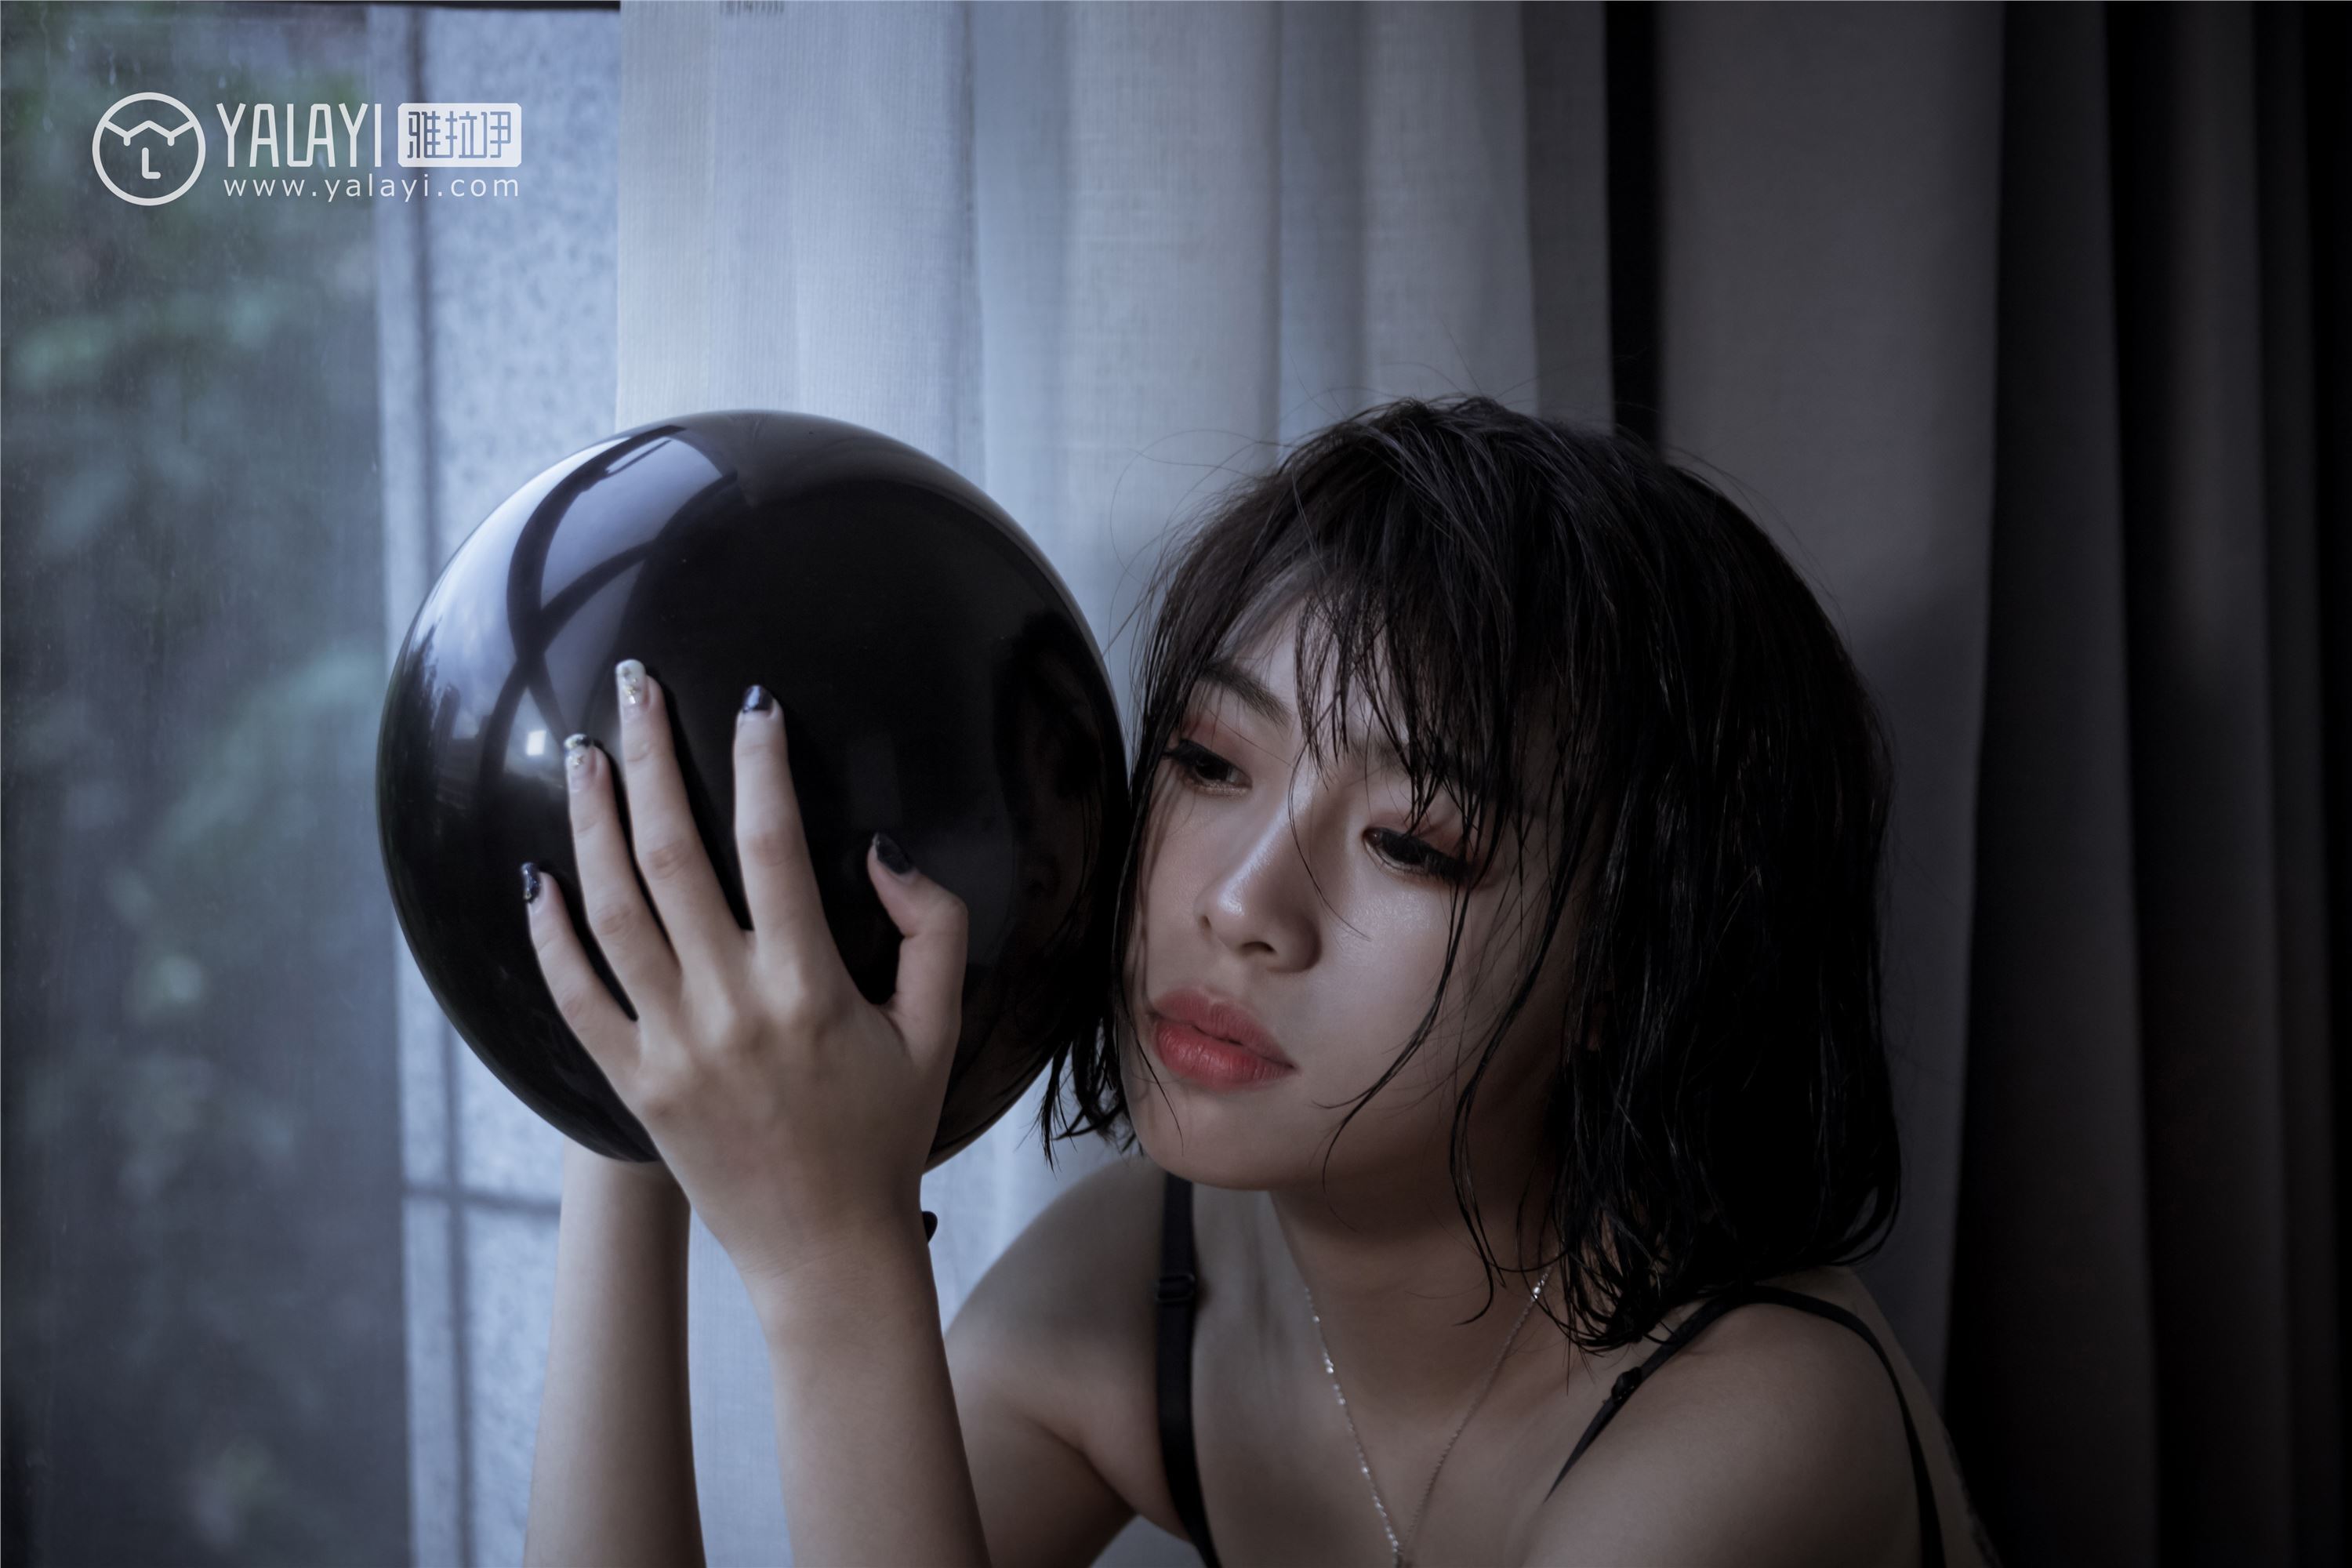 [yalayi yalayi] March 12, 2019 no.058 phantom balloon Xiao Yang